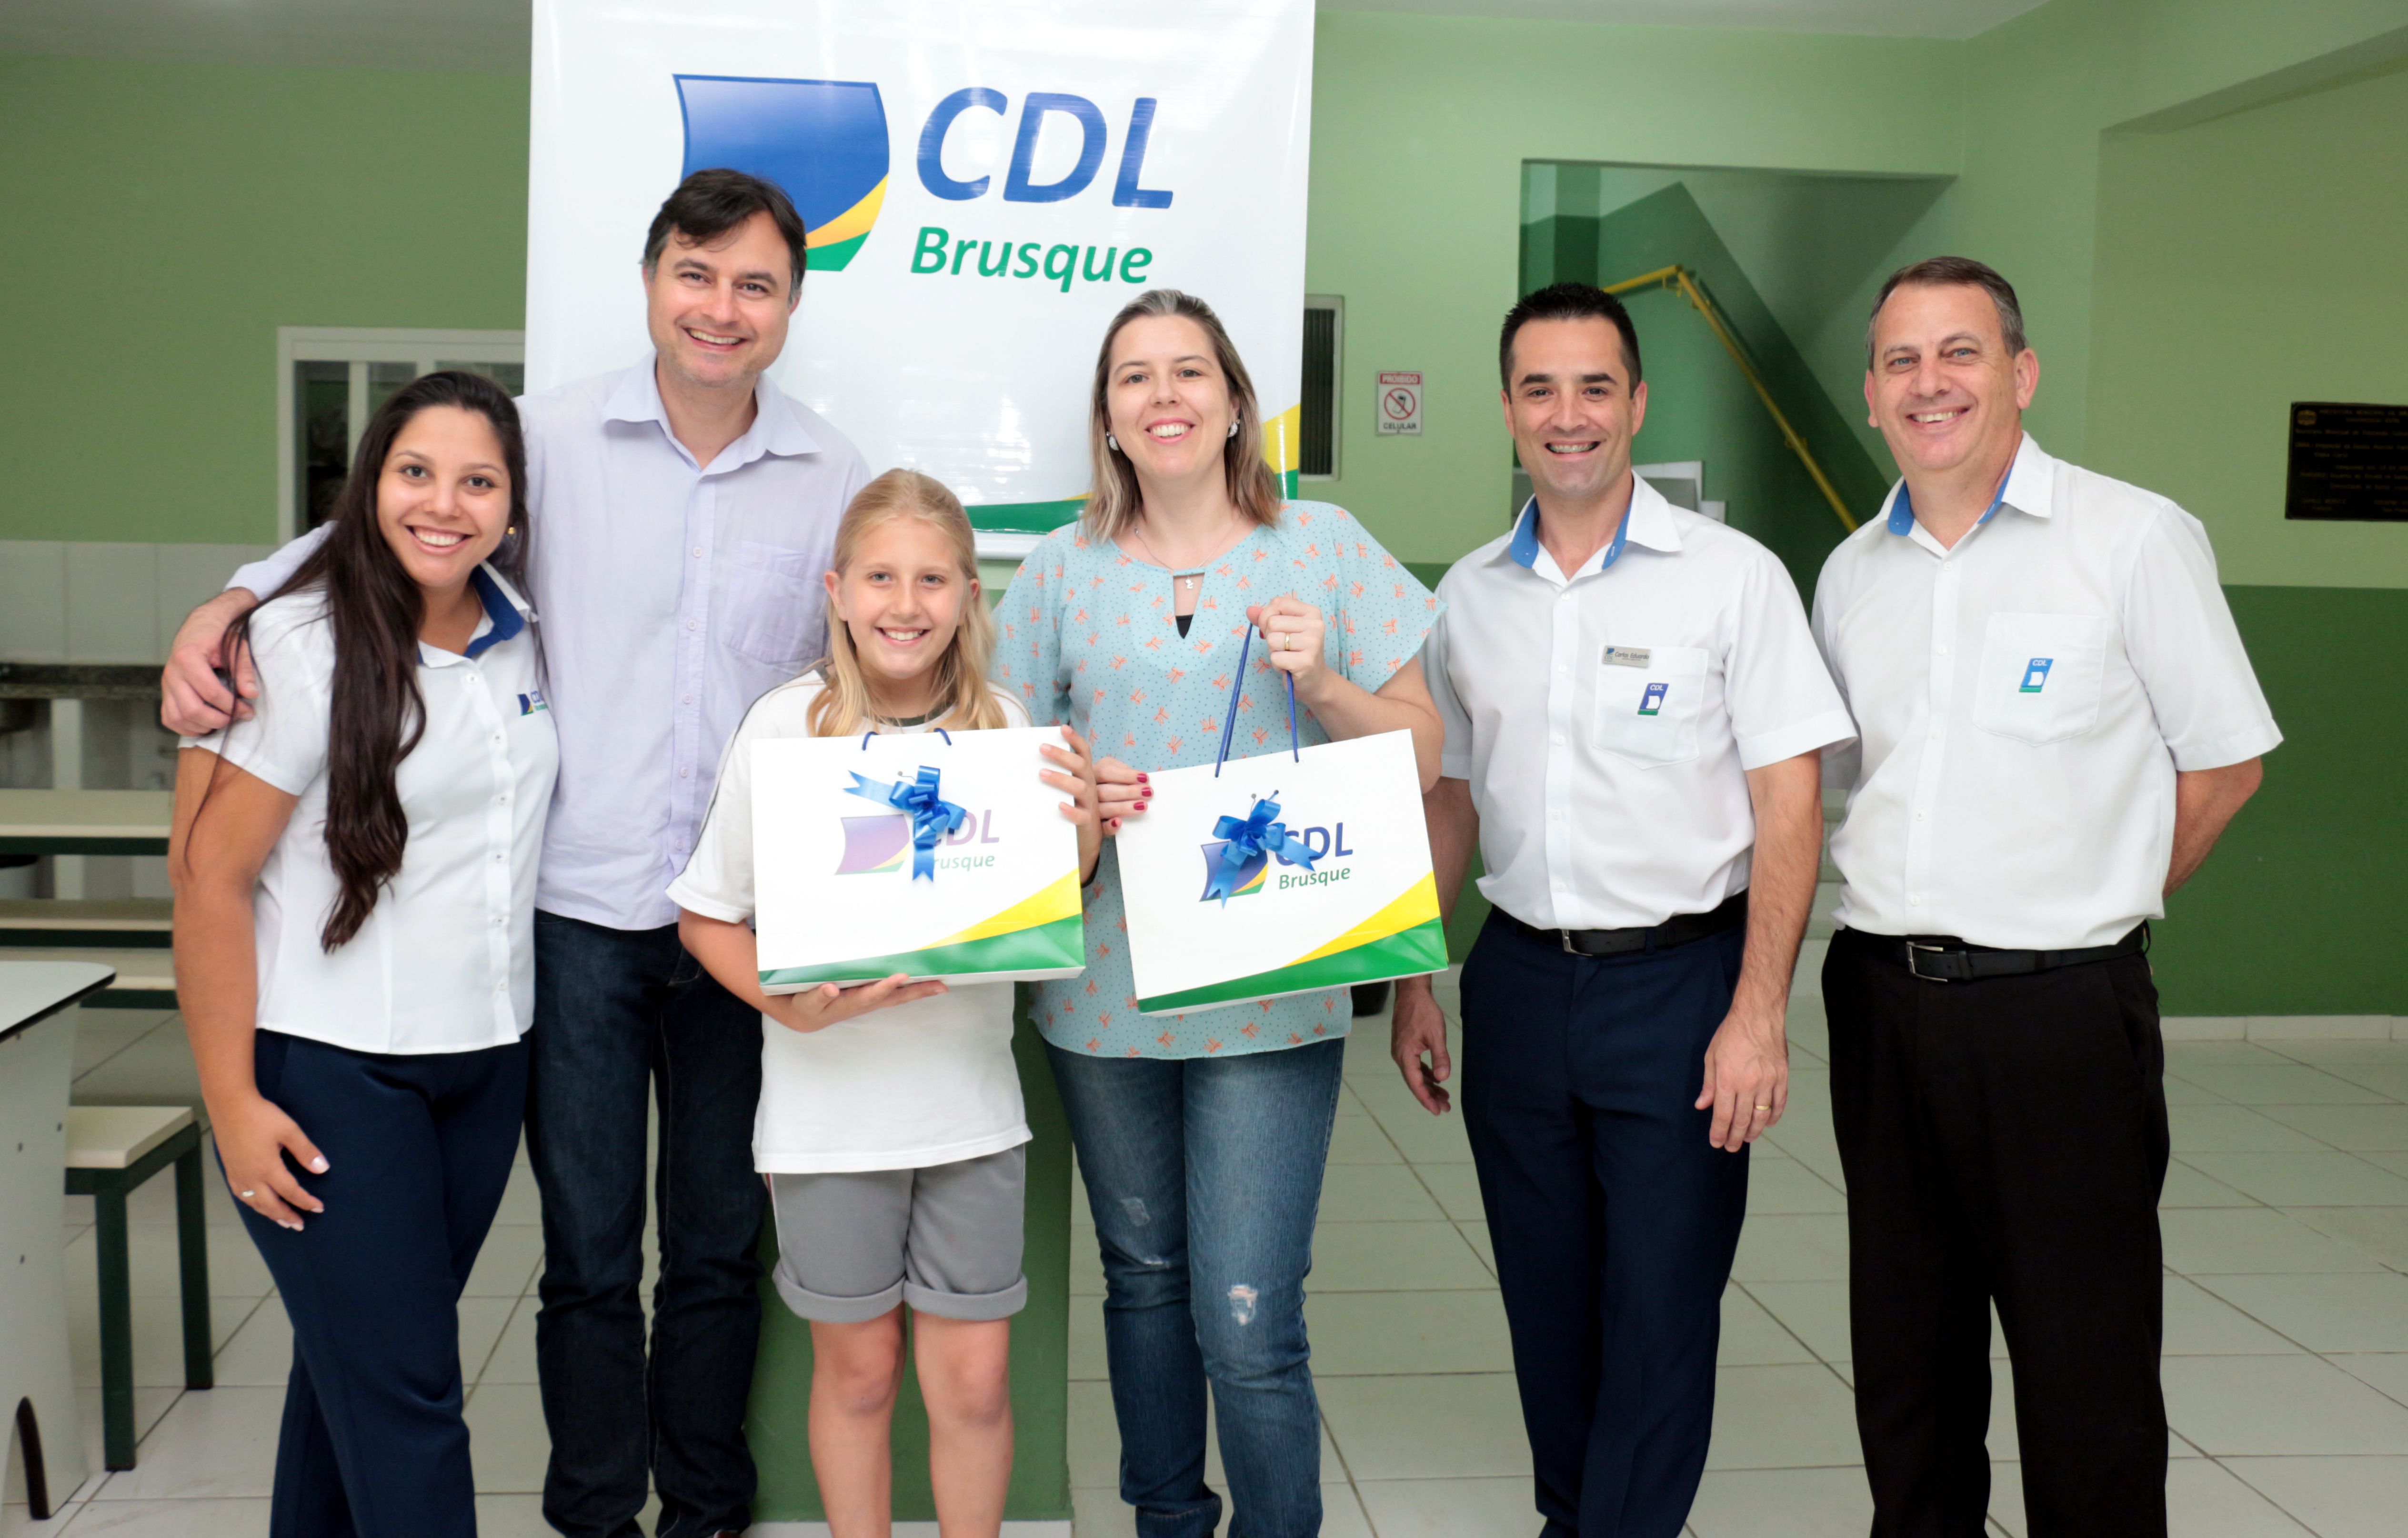 CDL Brusque, Notícias